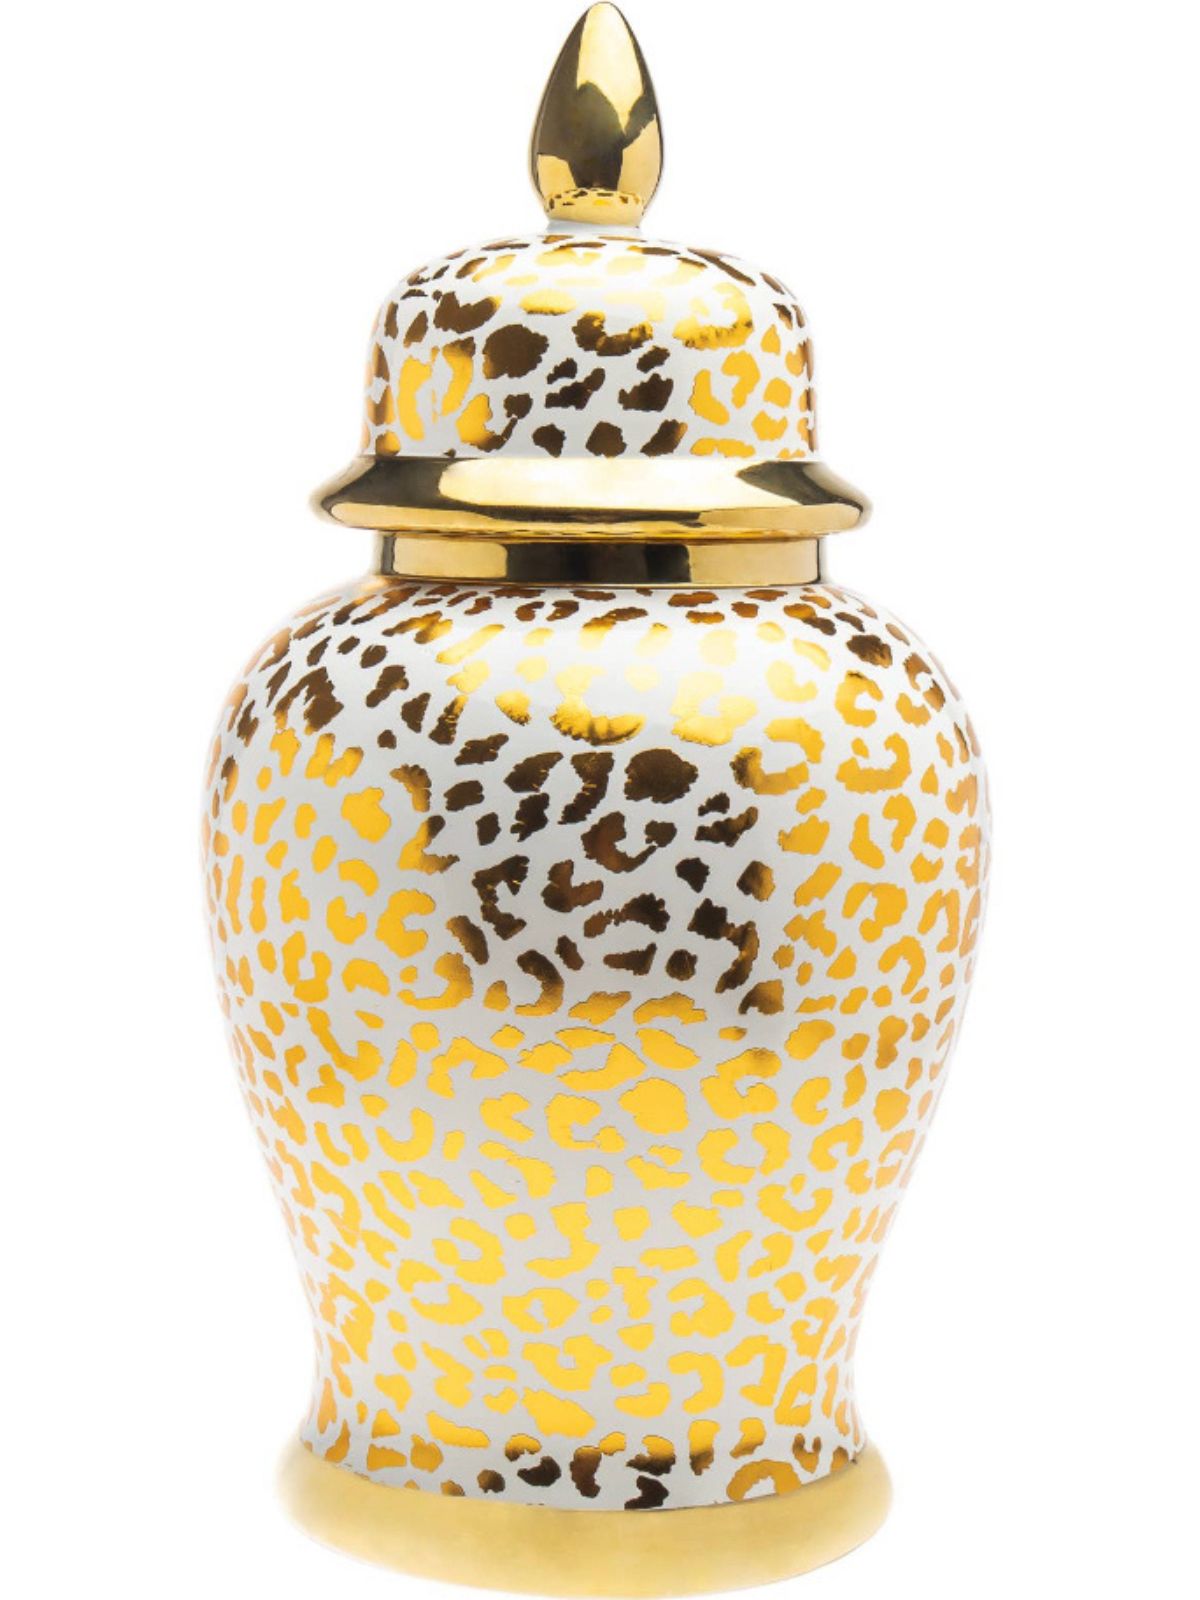 Leopard Print Porcelain Ginger Jar with an elegant gold-tone rim and base in size Large